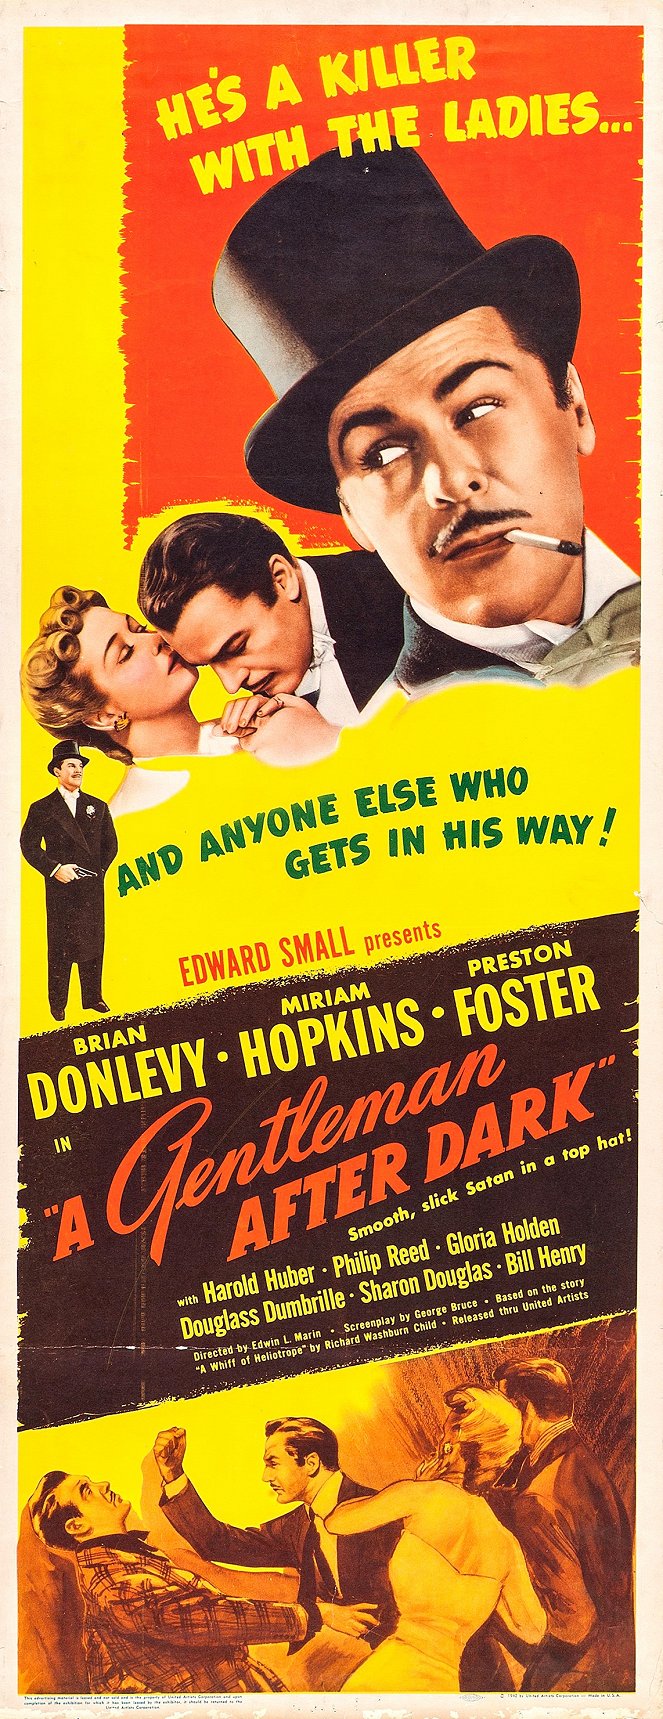 A Gentleman After Dark - Posters